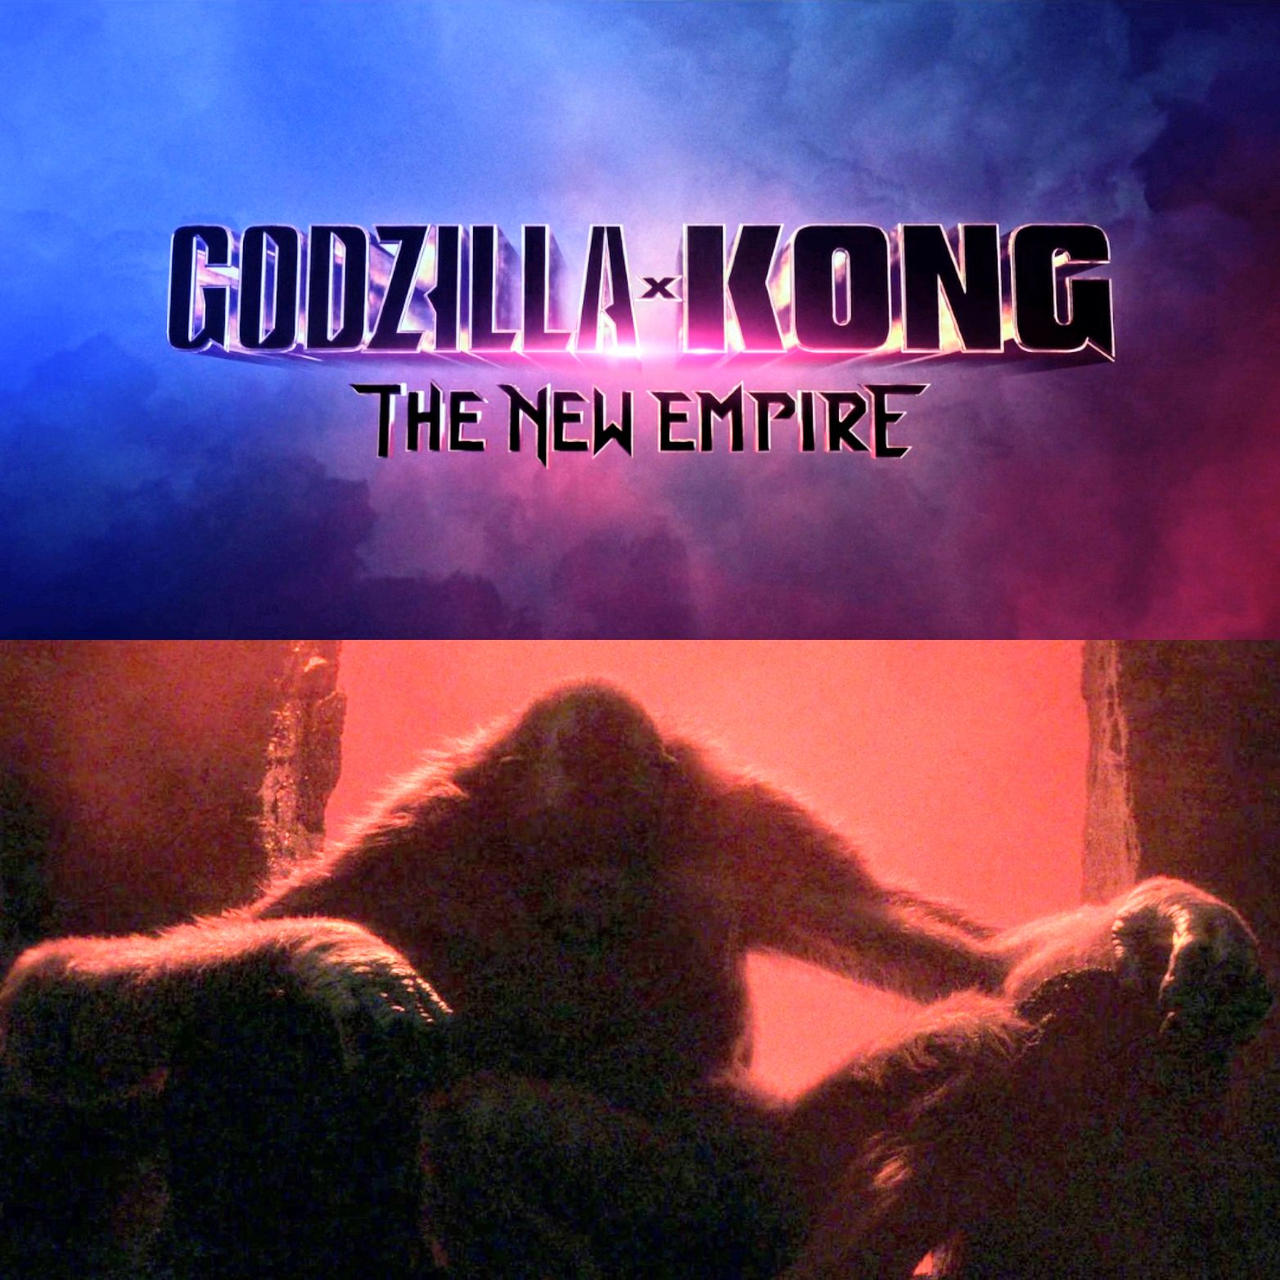 Garden banban 4 and godzilla + Kong The new empire by karorivers on  DeviantArt